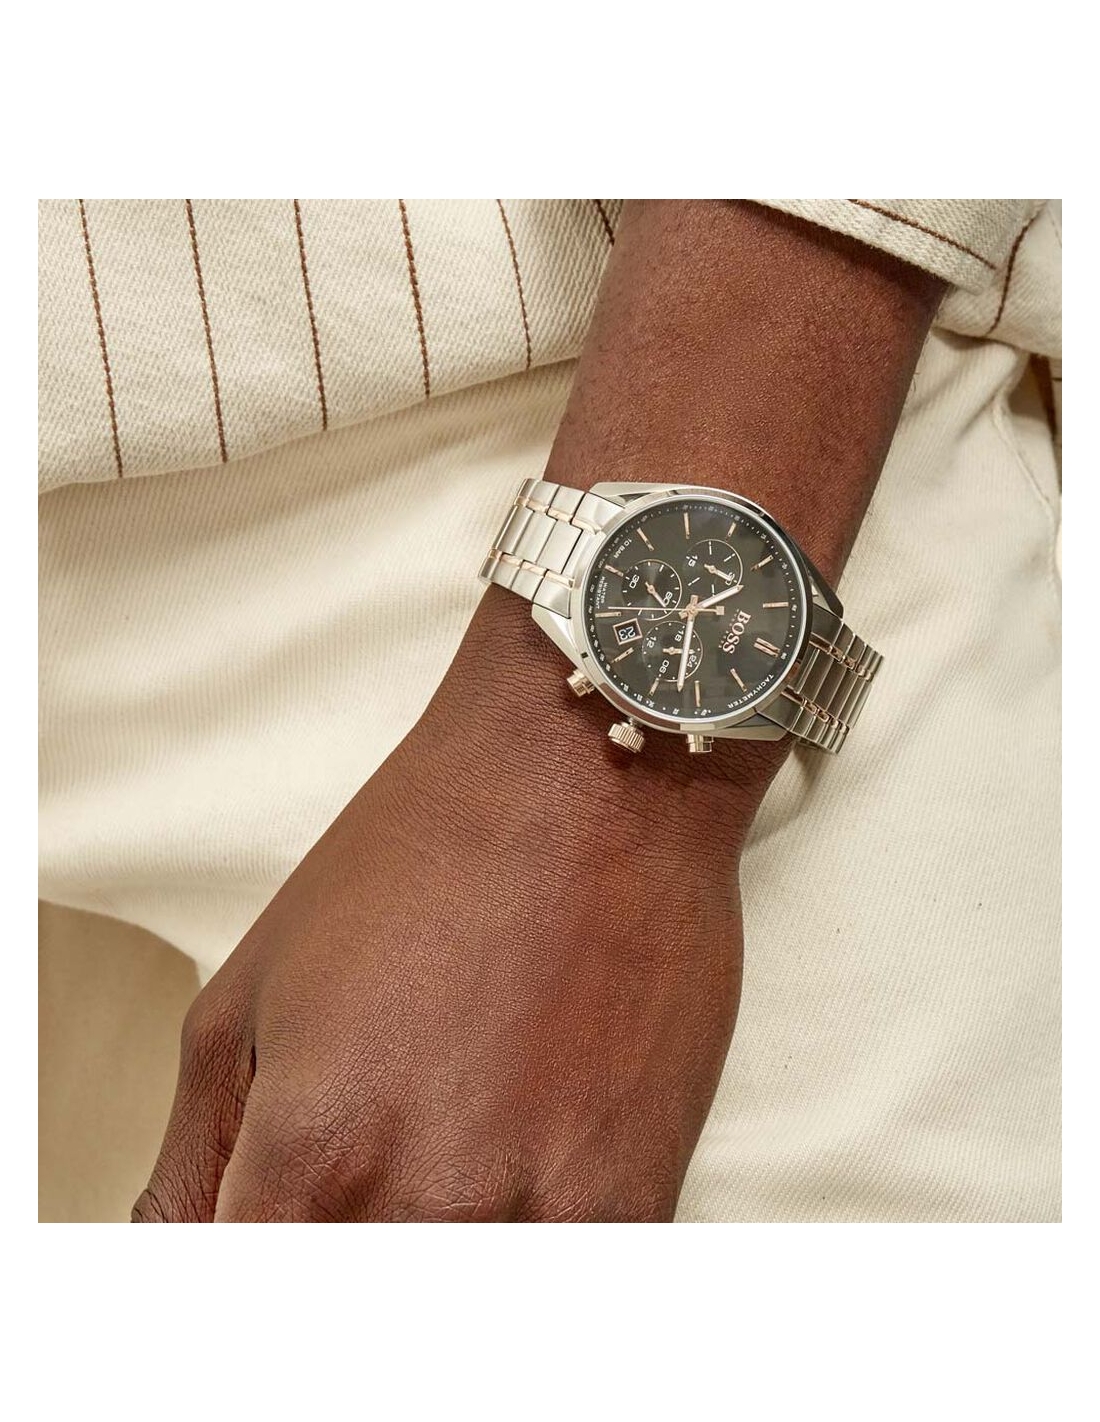 Hugo Boss Champion 1513819 stainless steel chronograph men's watch